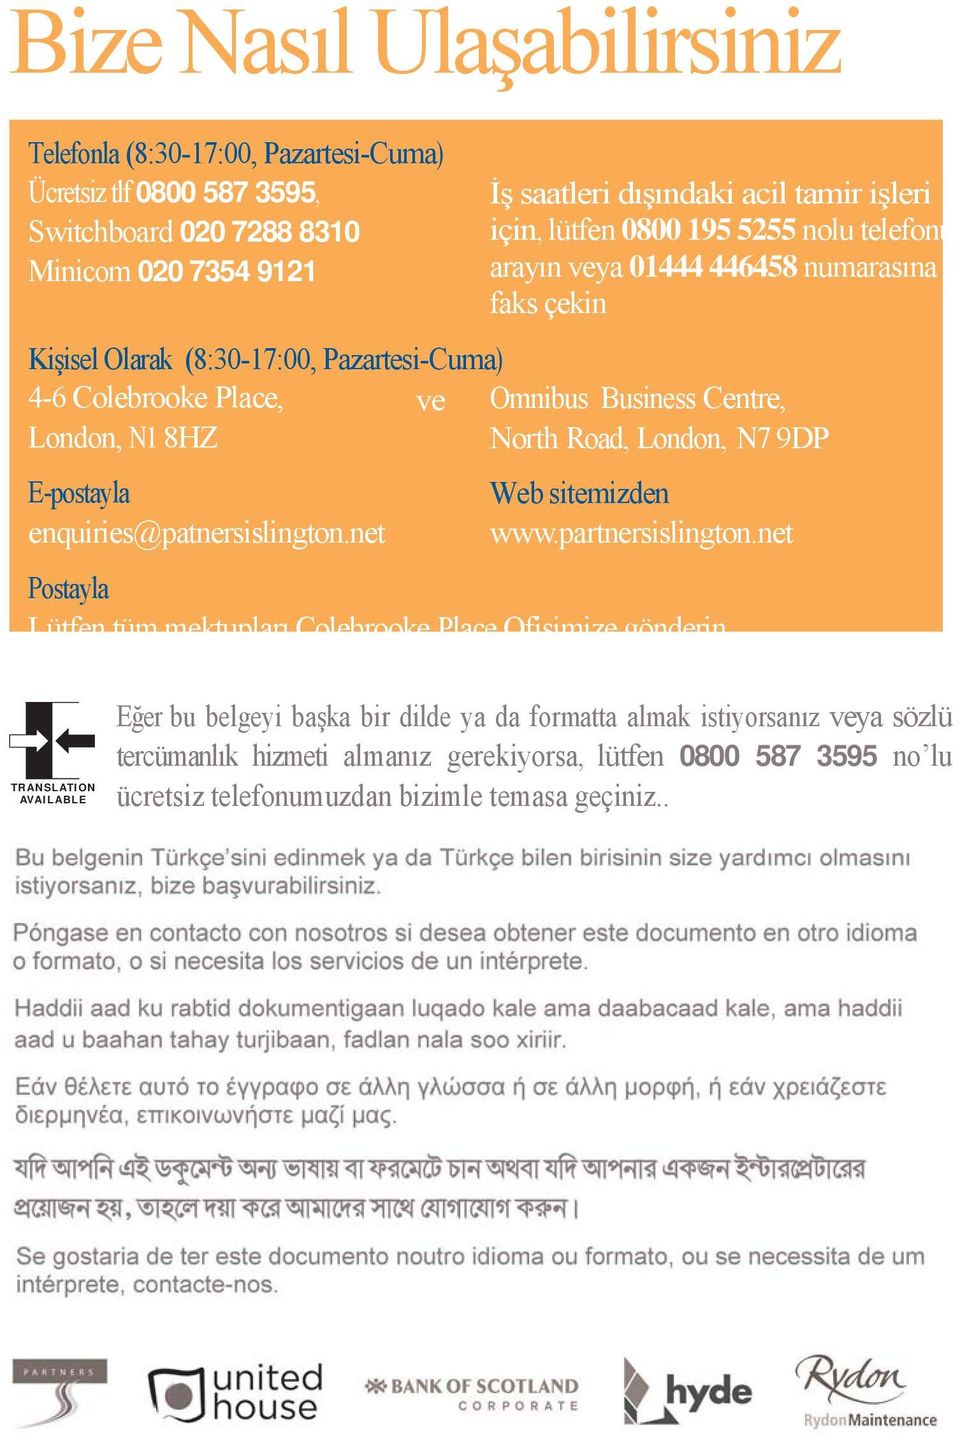 London, N7 9DP E-postayla enquiries@patnersislington.net Web sitemizden www.partnersislington.